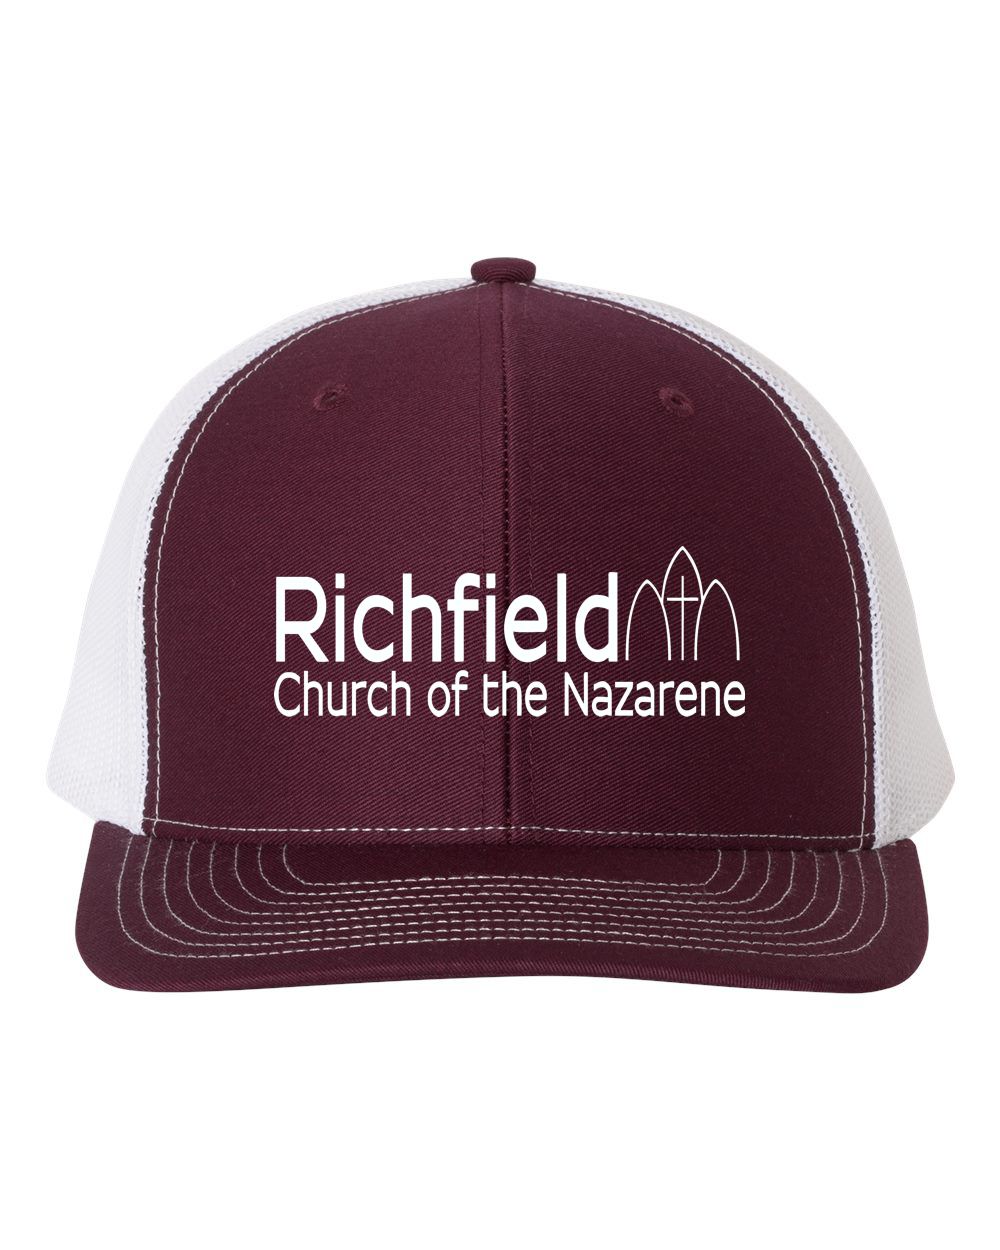 Richfield Church of the Nazarene Snap Back Hat